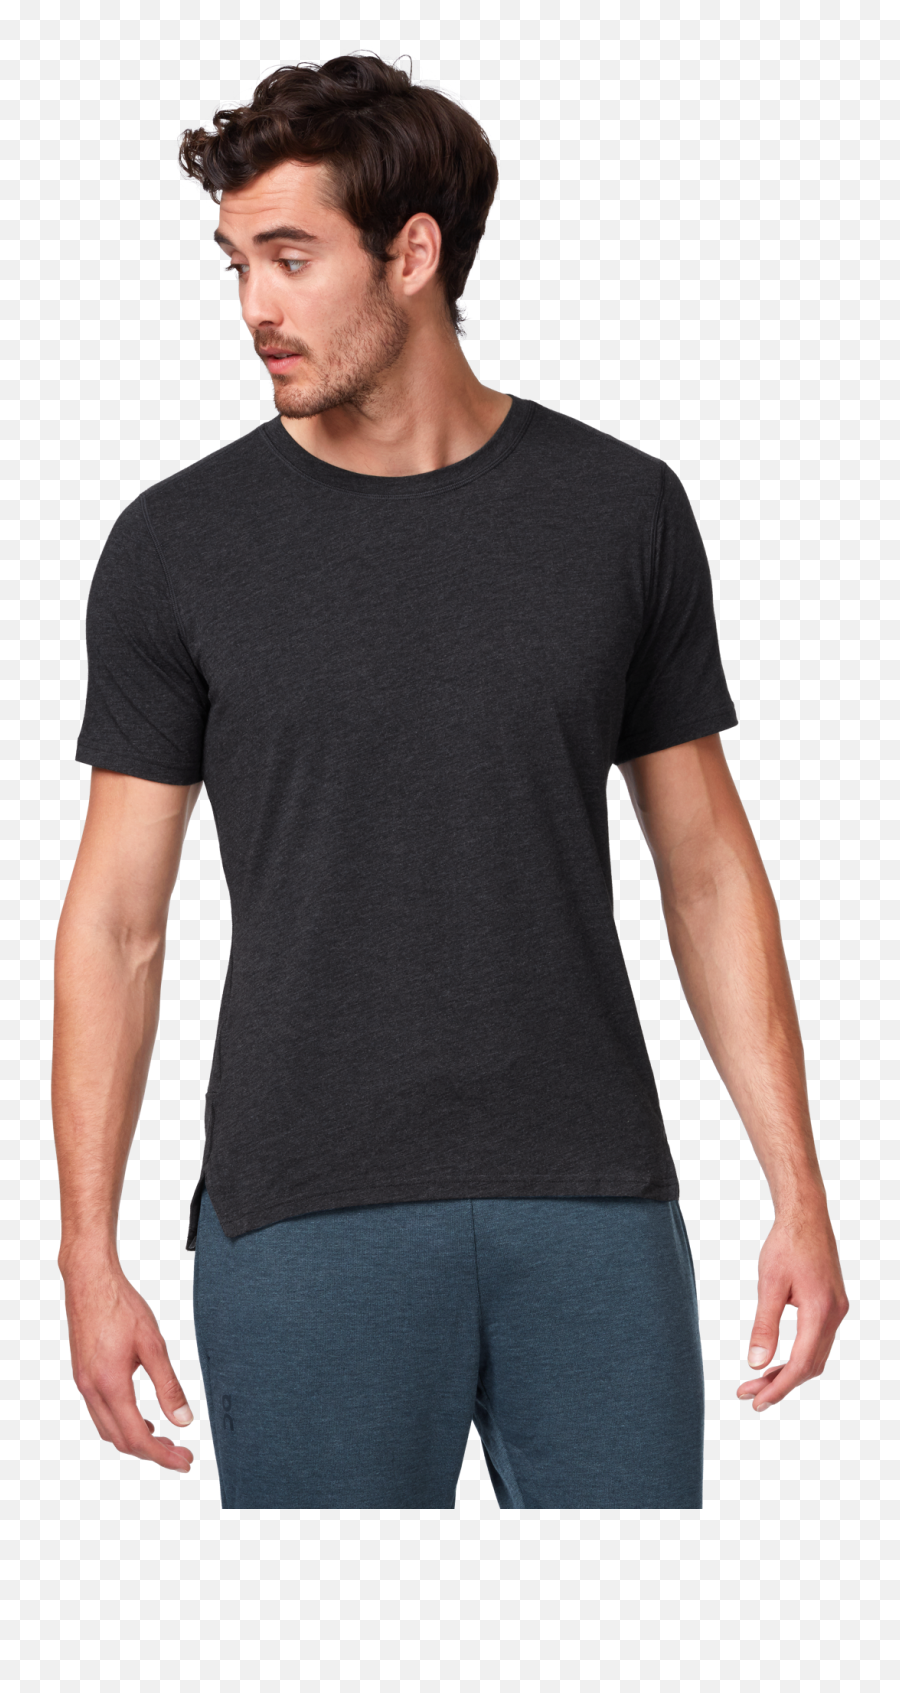 Comfort - Standing Emoji,Black Shirt Png